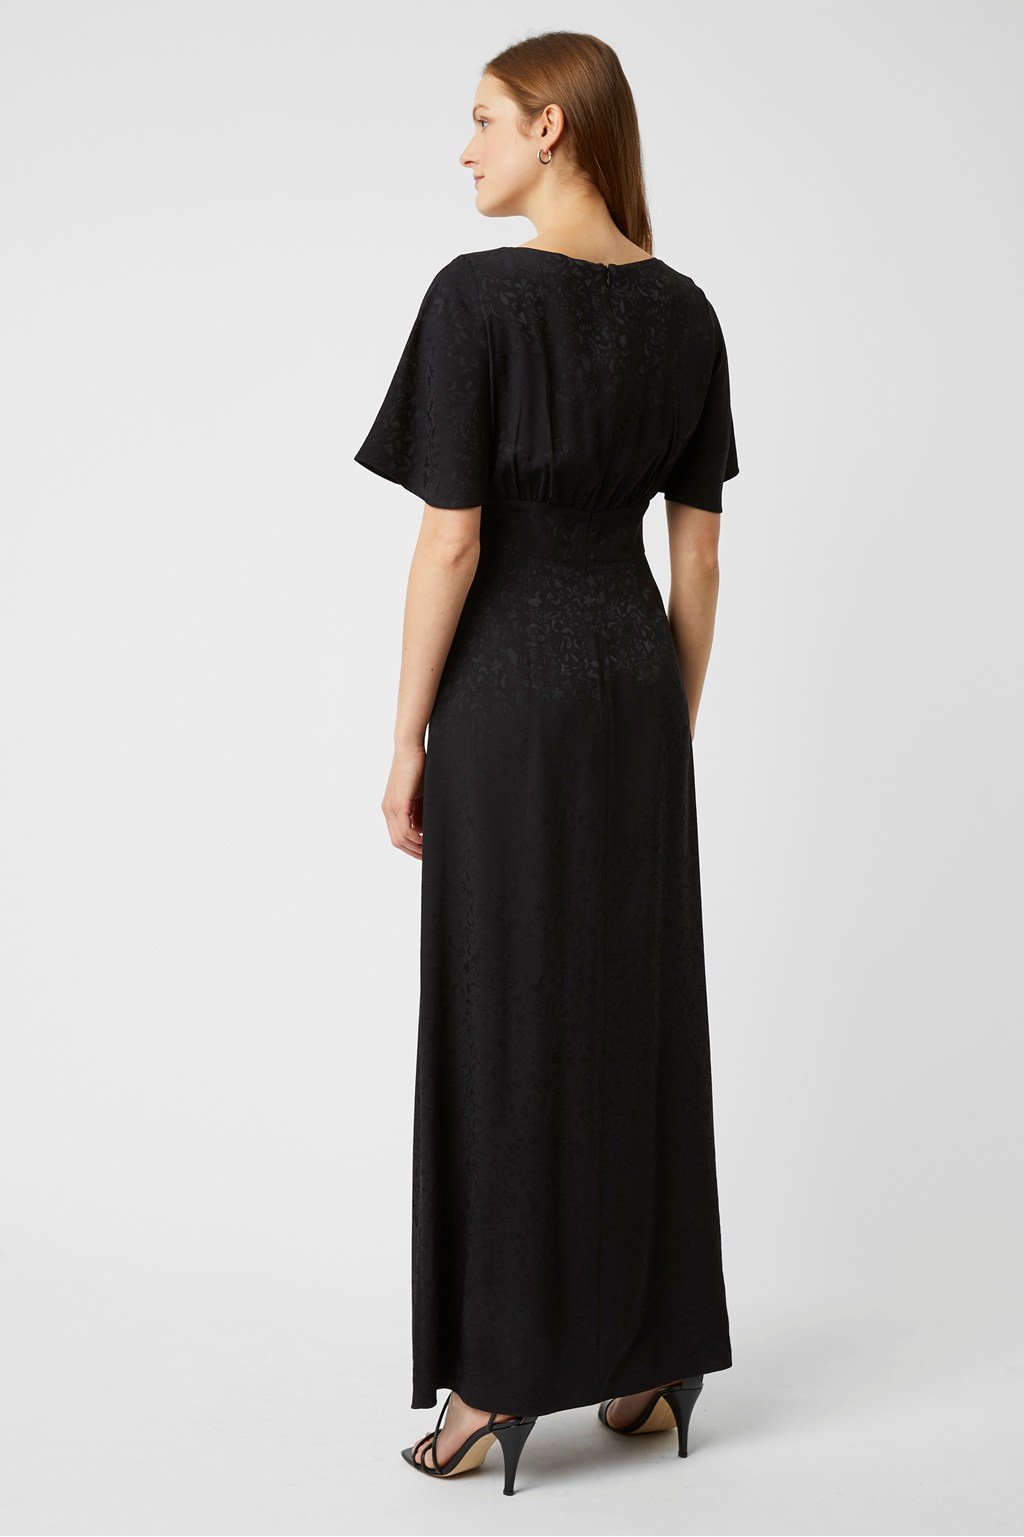 Great Plains Peppy Jacquard Round Neck Maxi Dress-Black-Fi&Co Boutique